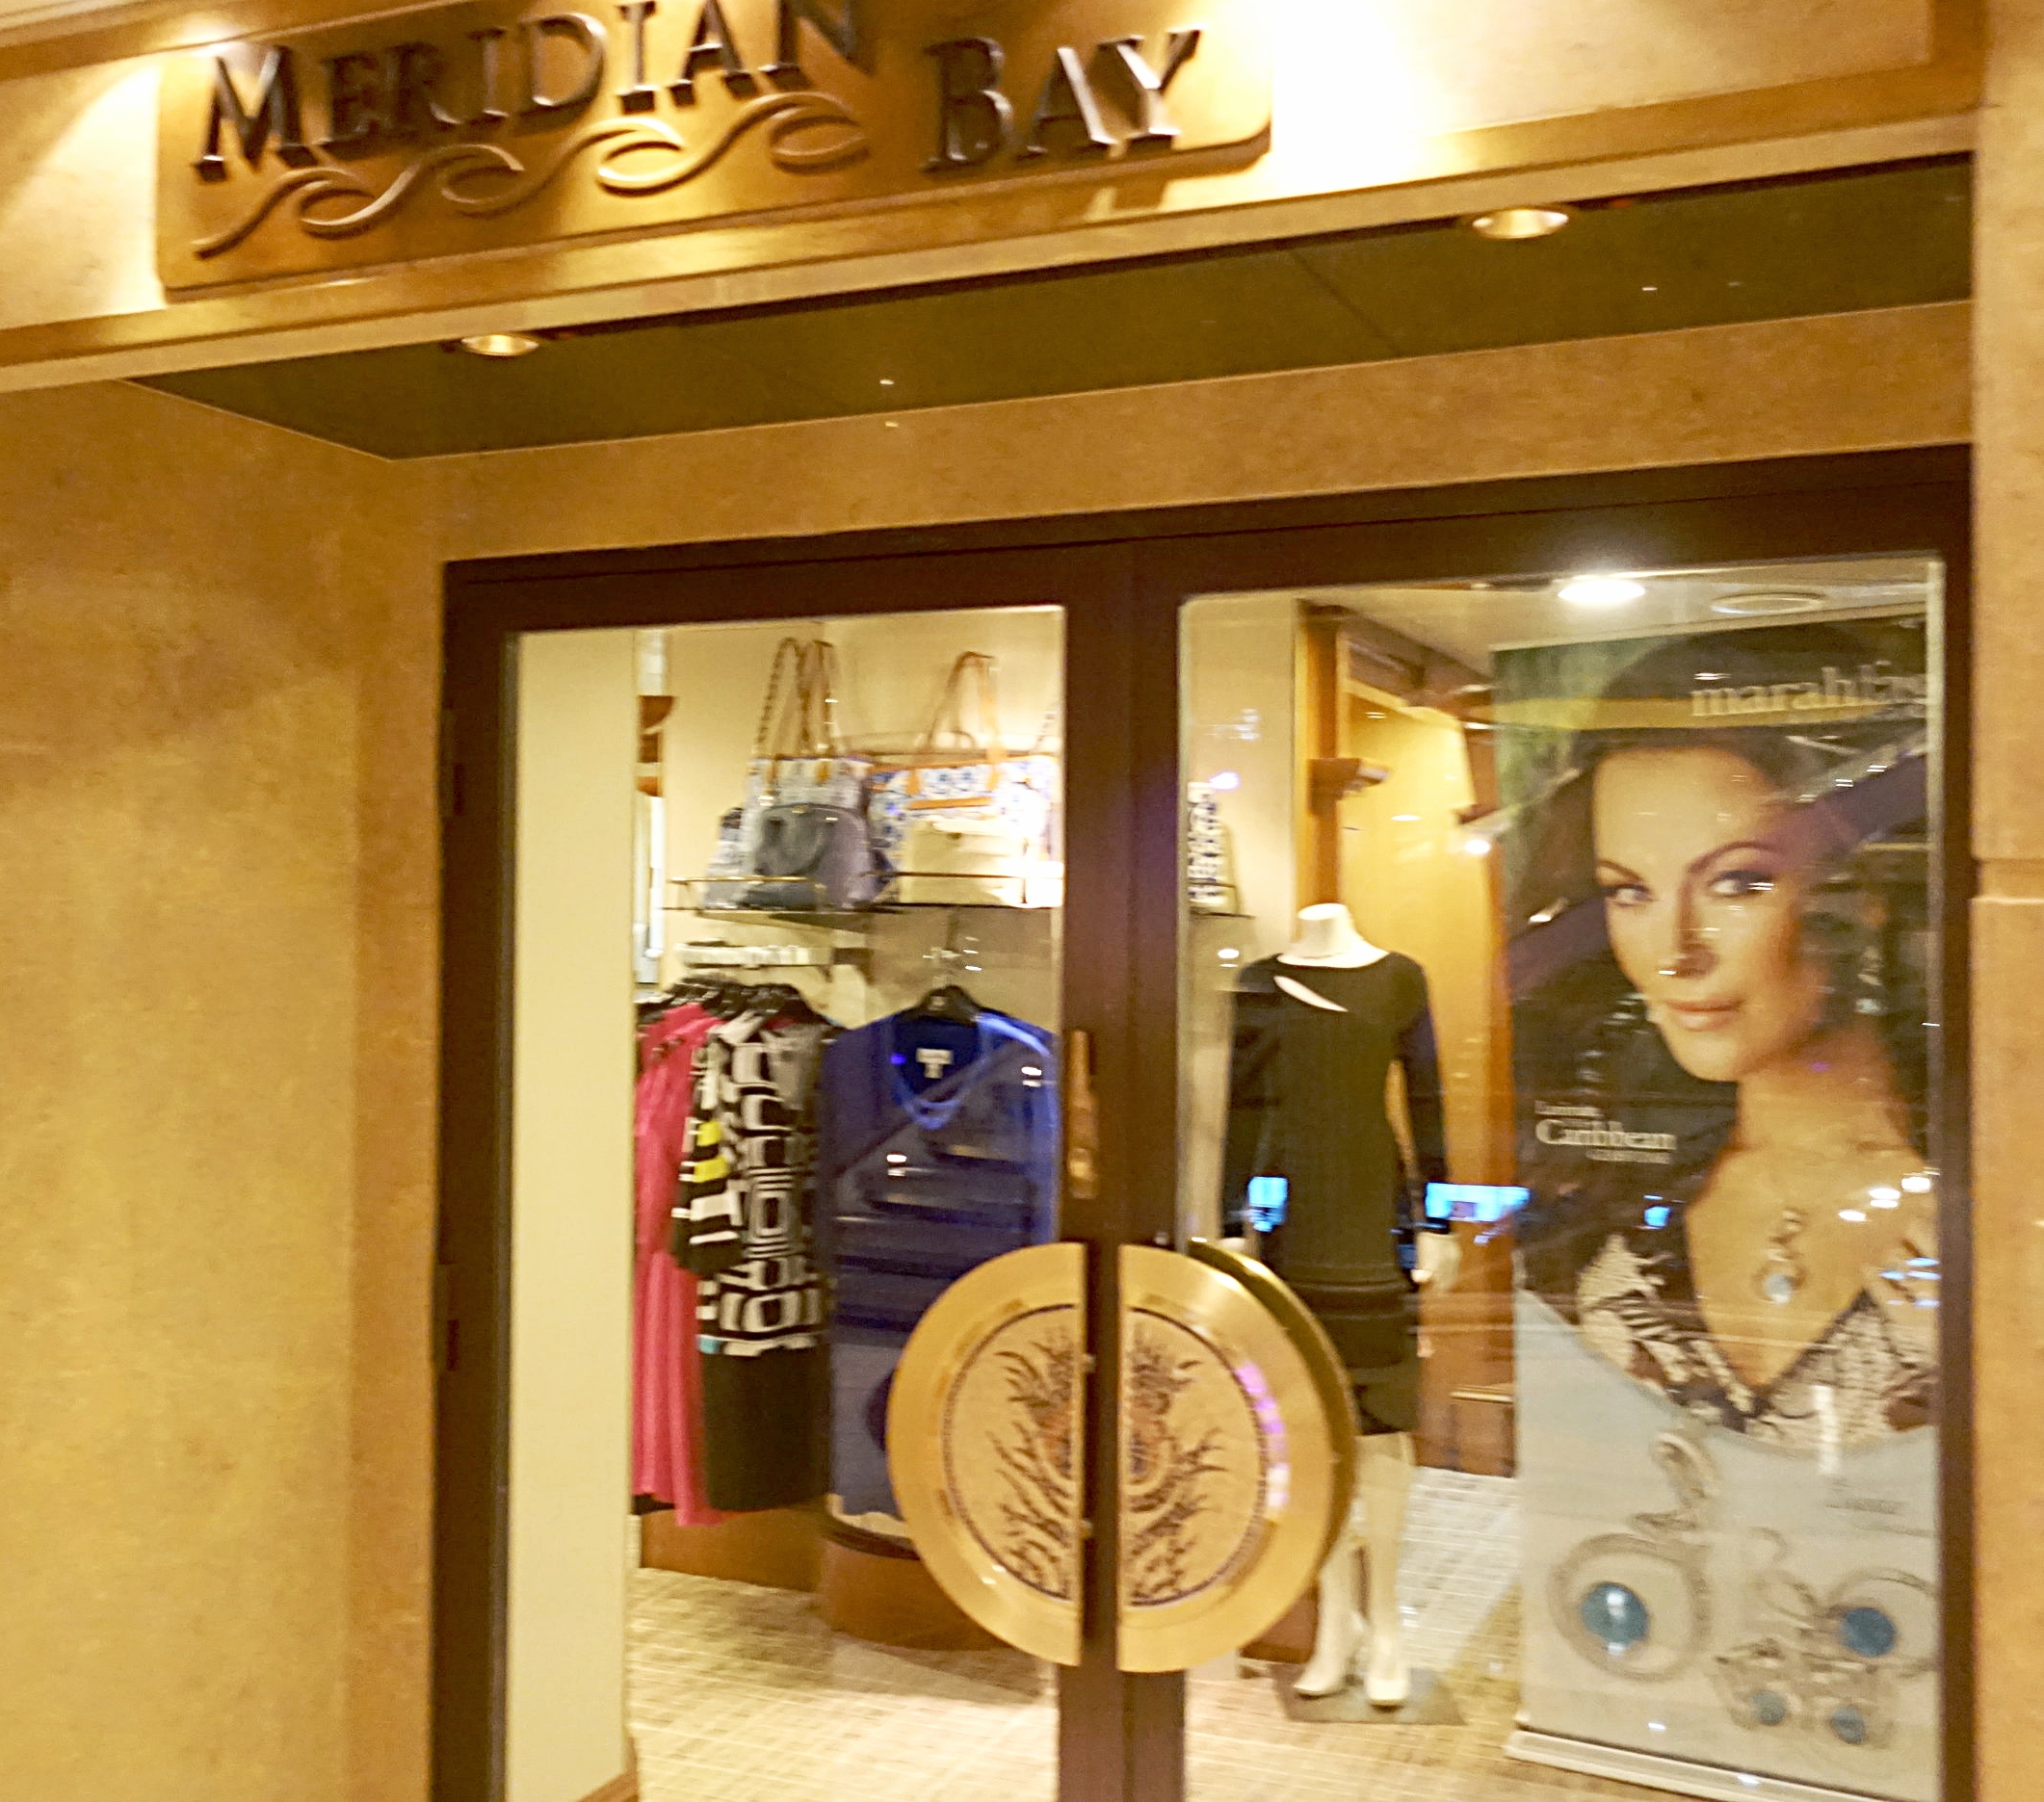  Meridian Bay shop.  